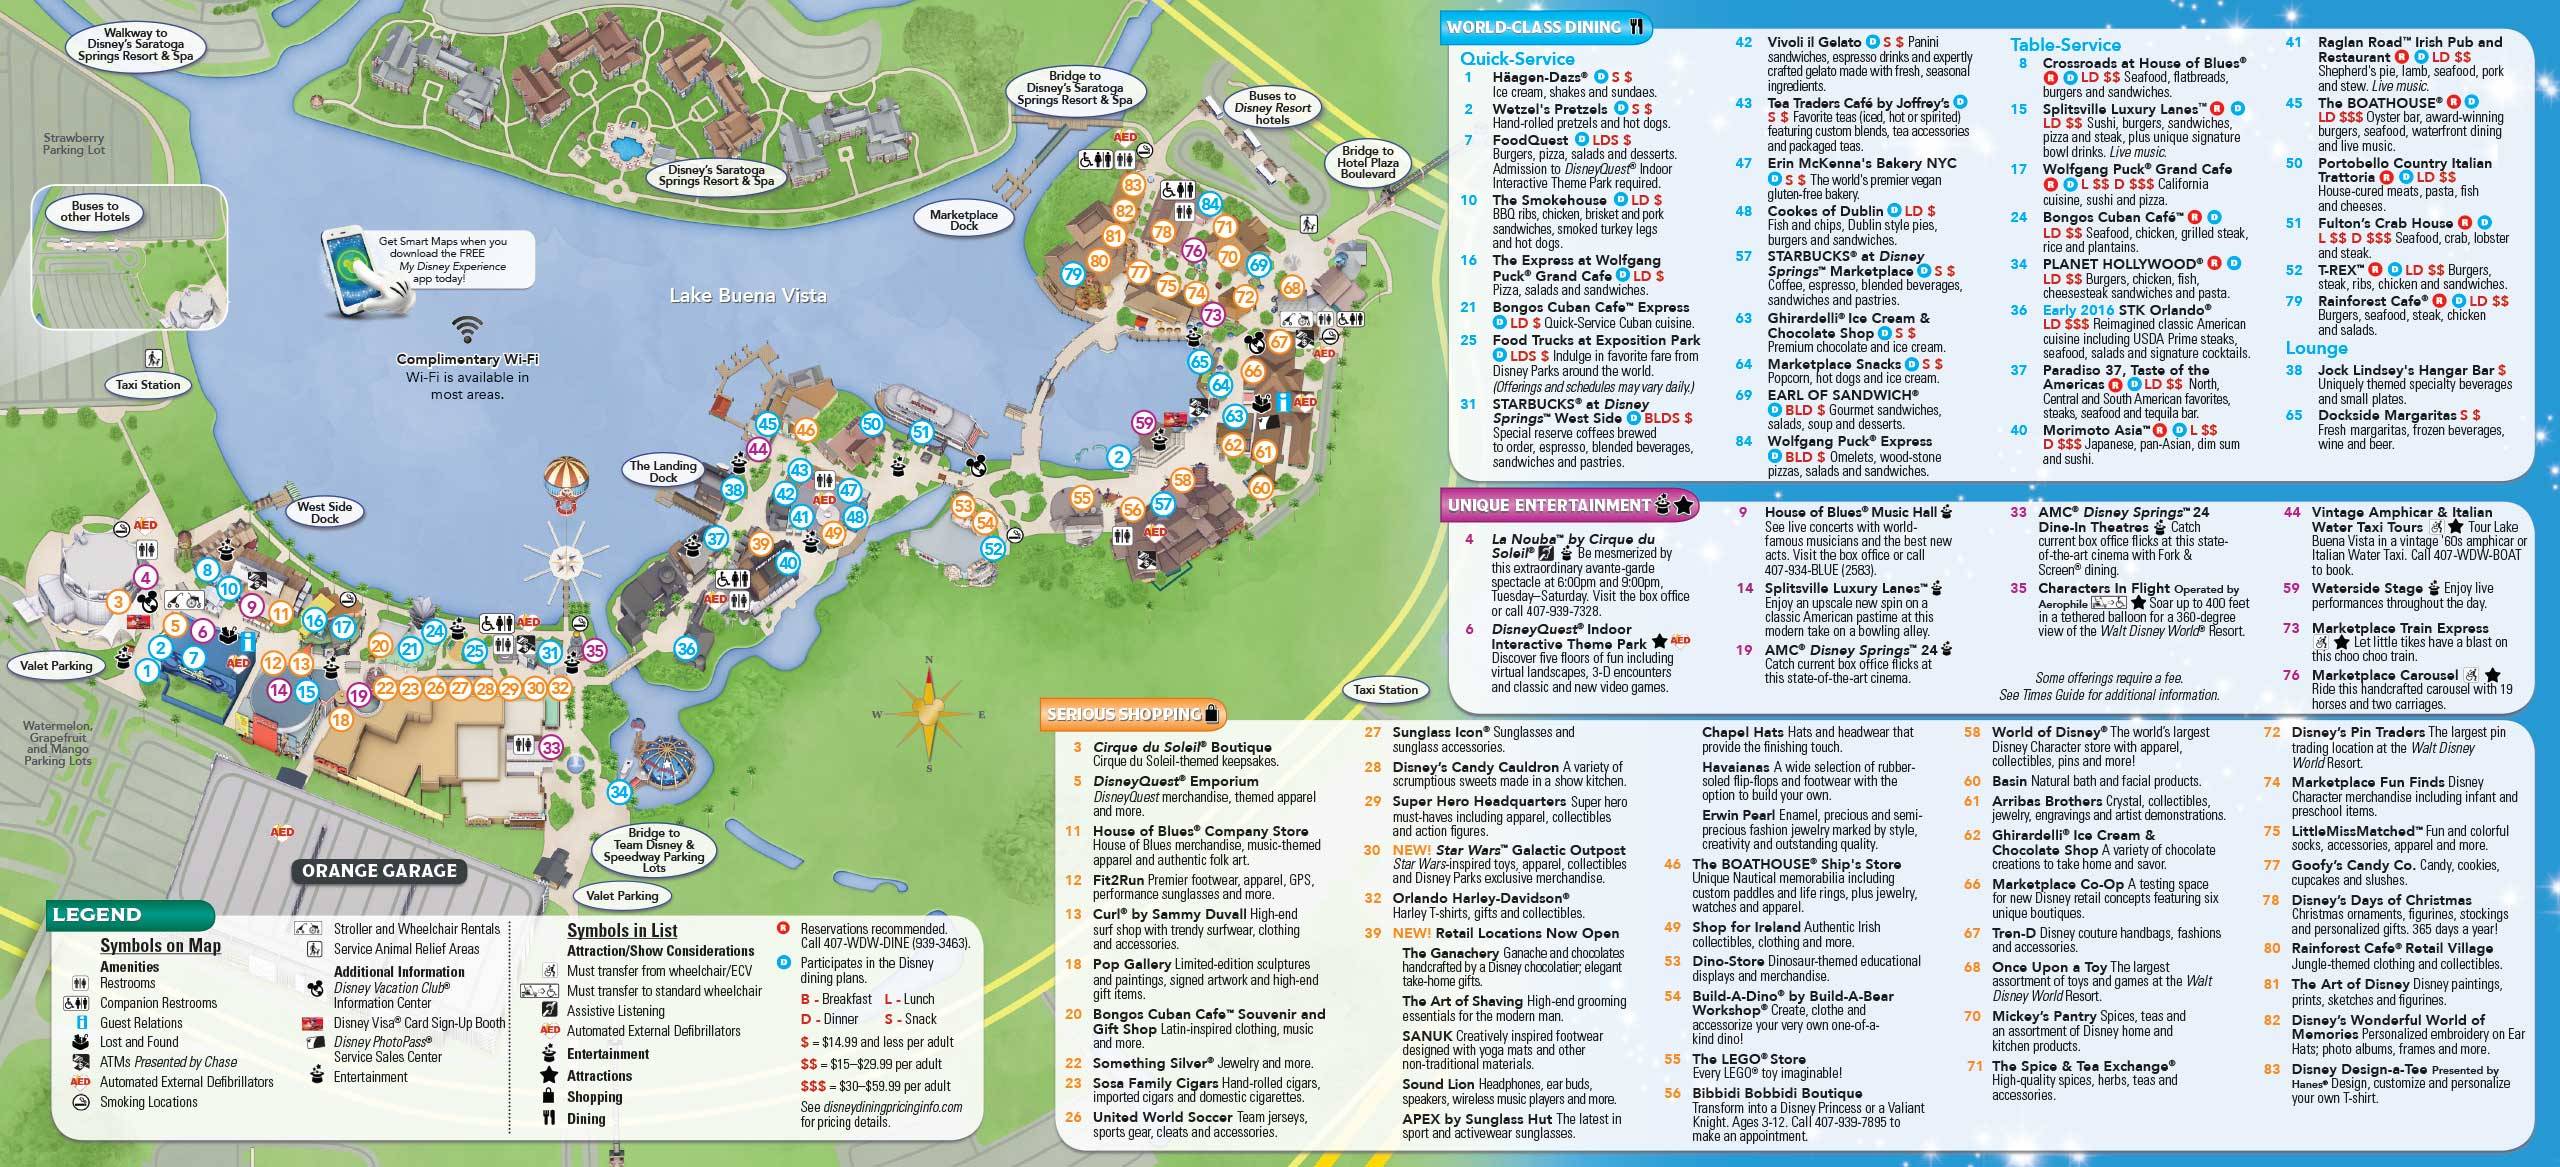 Disney Springs Guide Map January 2016 - Back